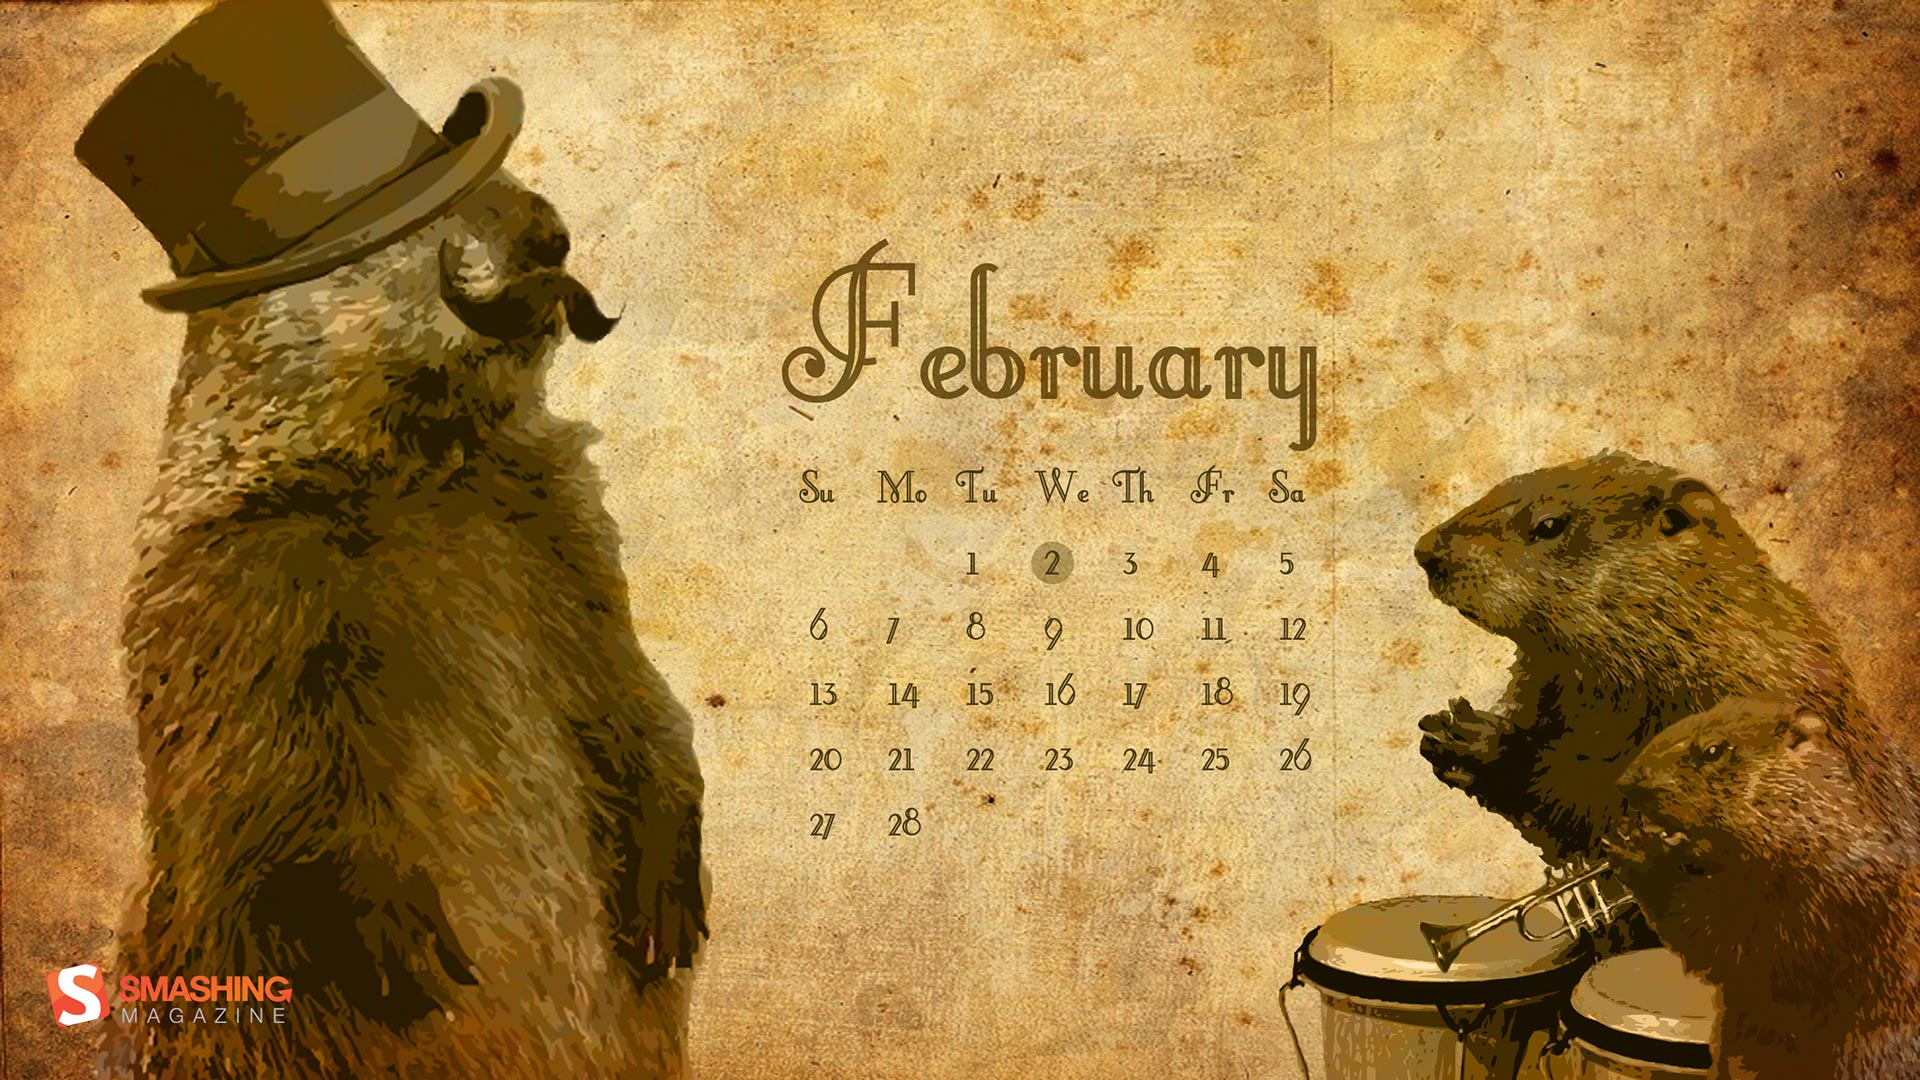 Free Wallpapers   Groundhog Day   February 2011 Calendar wallpaper